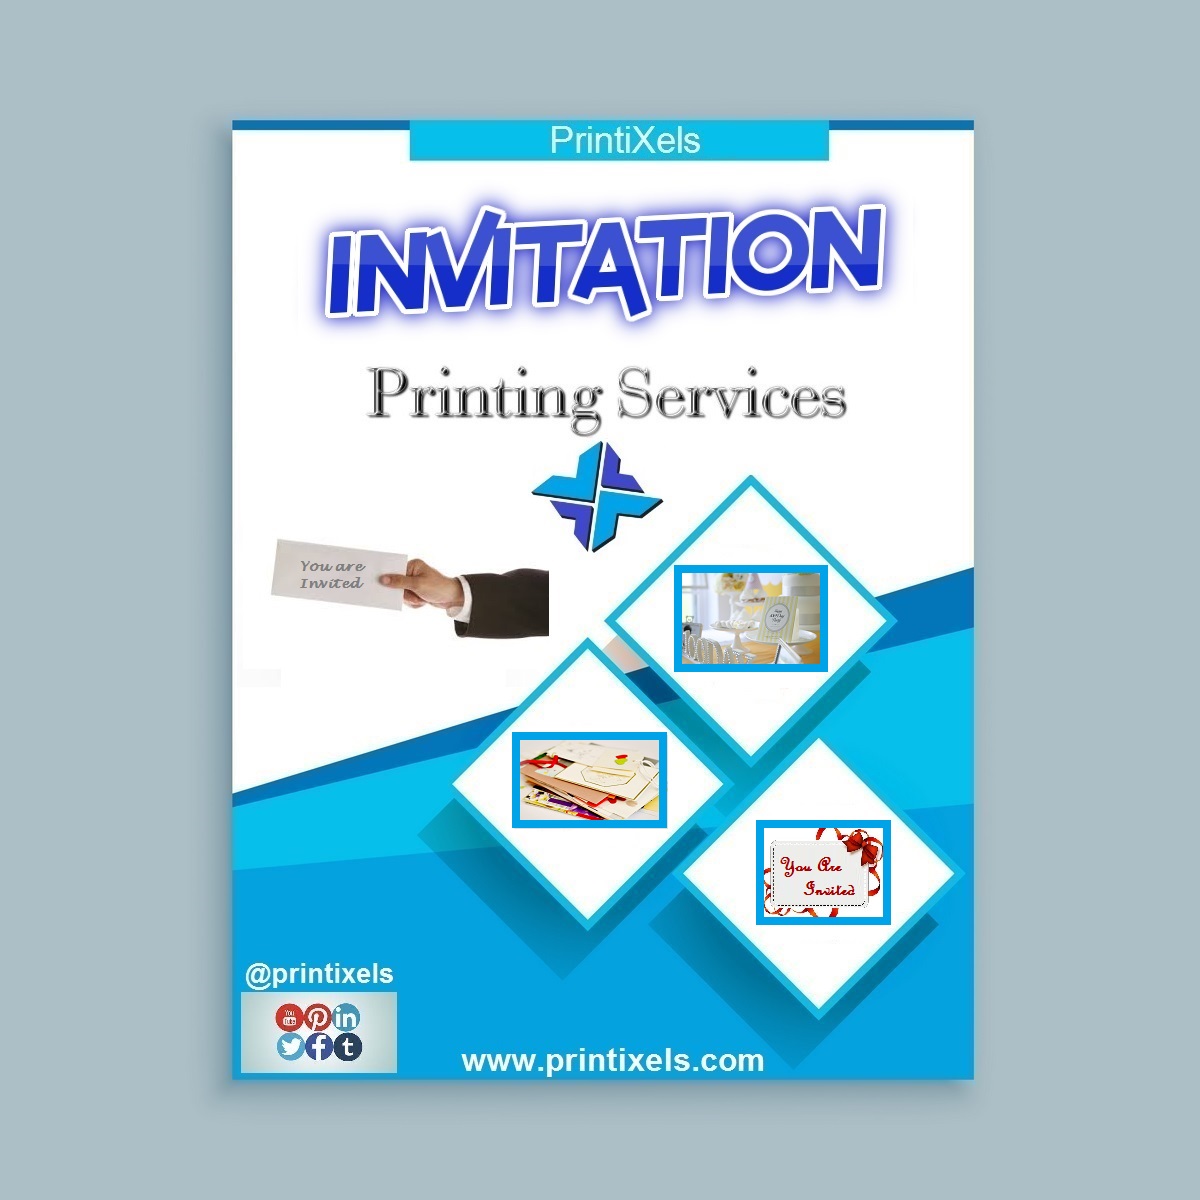 Invitation Printing Services